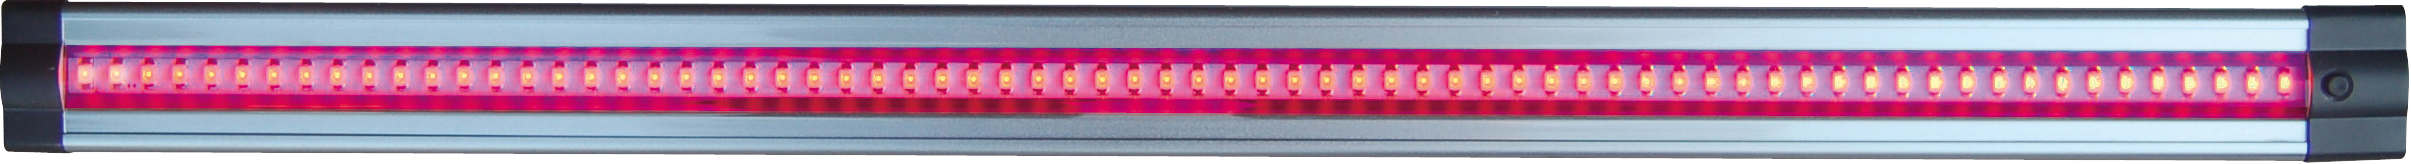 IP20 5W 72 LED Thin Linear Light 24V Red 510mm - LED5WR 